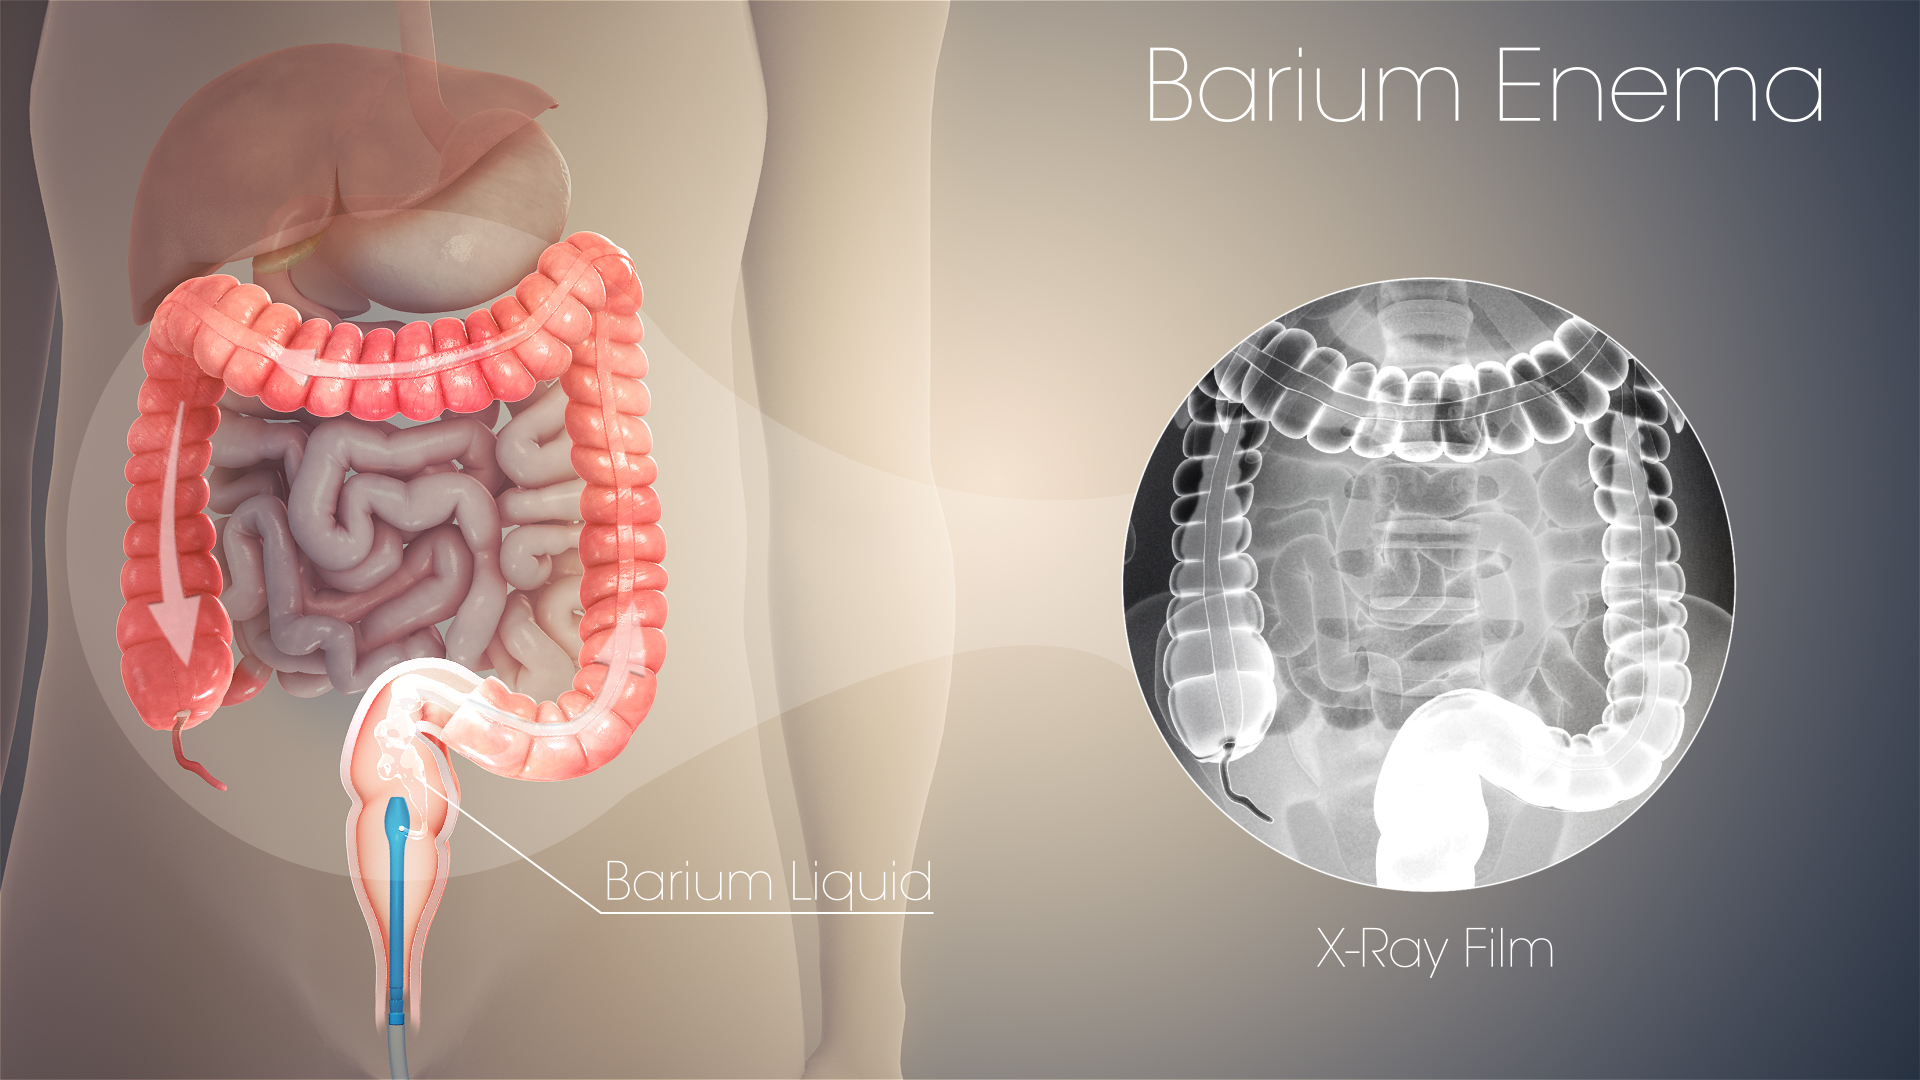 Barium Enema: Fluoroscopic X-ray of the Lower GI Tract